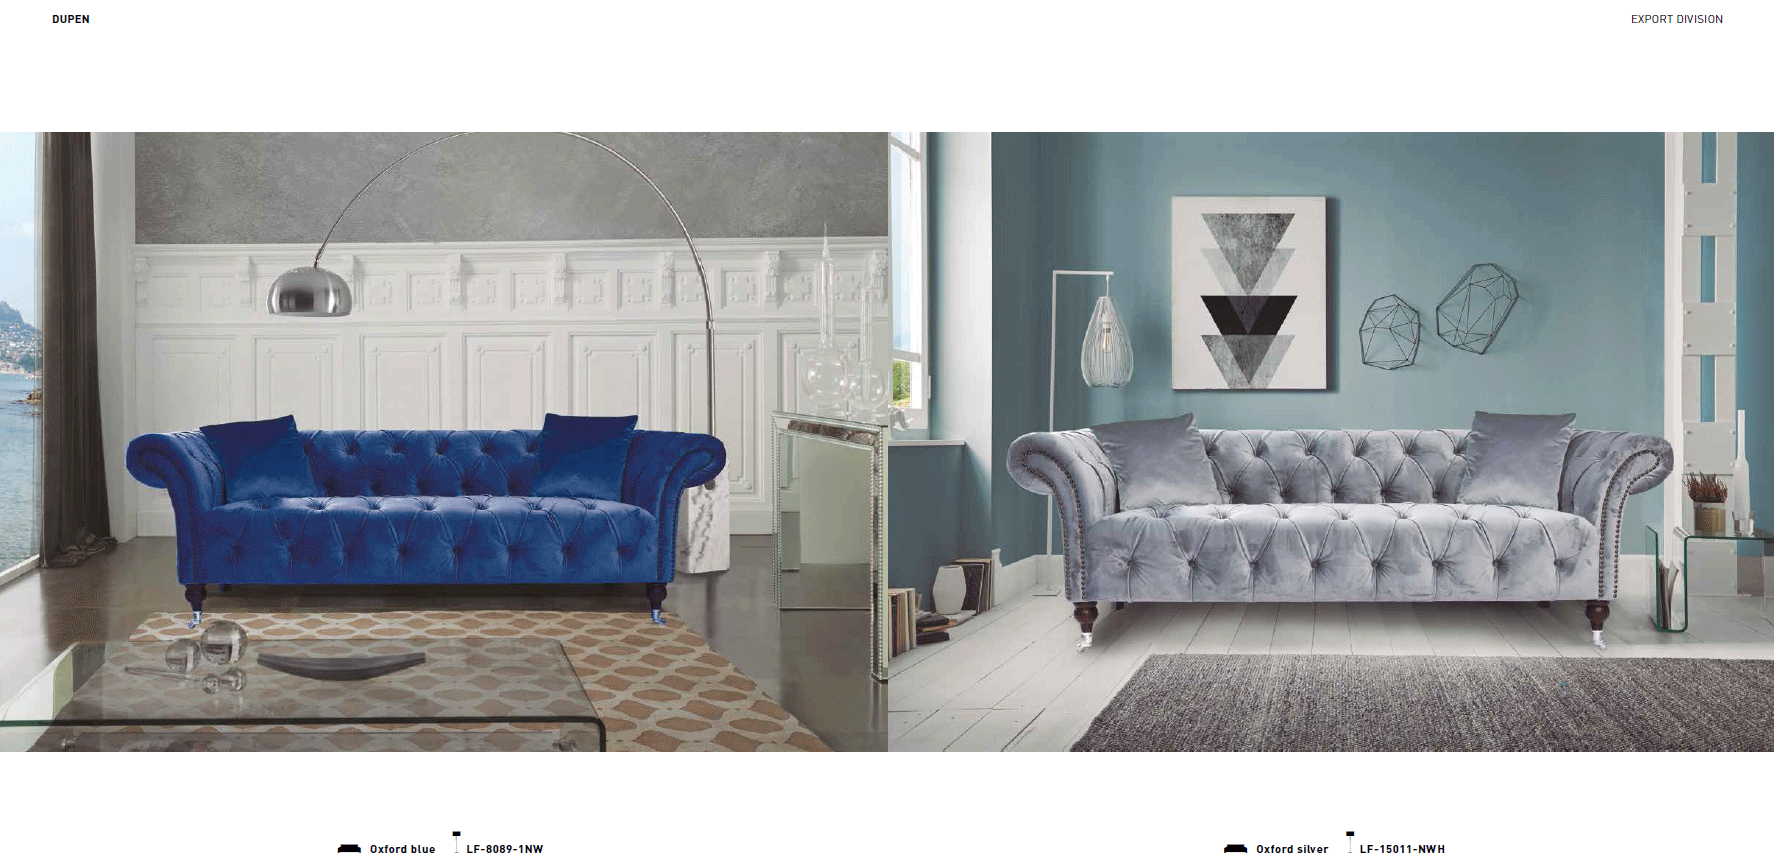 Living Room Furniture Rugs Oxford Sofa, FL-15011-NWH, LF-8089-1NW